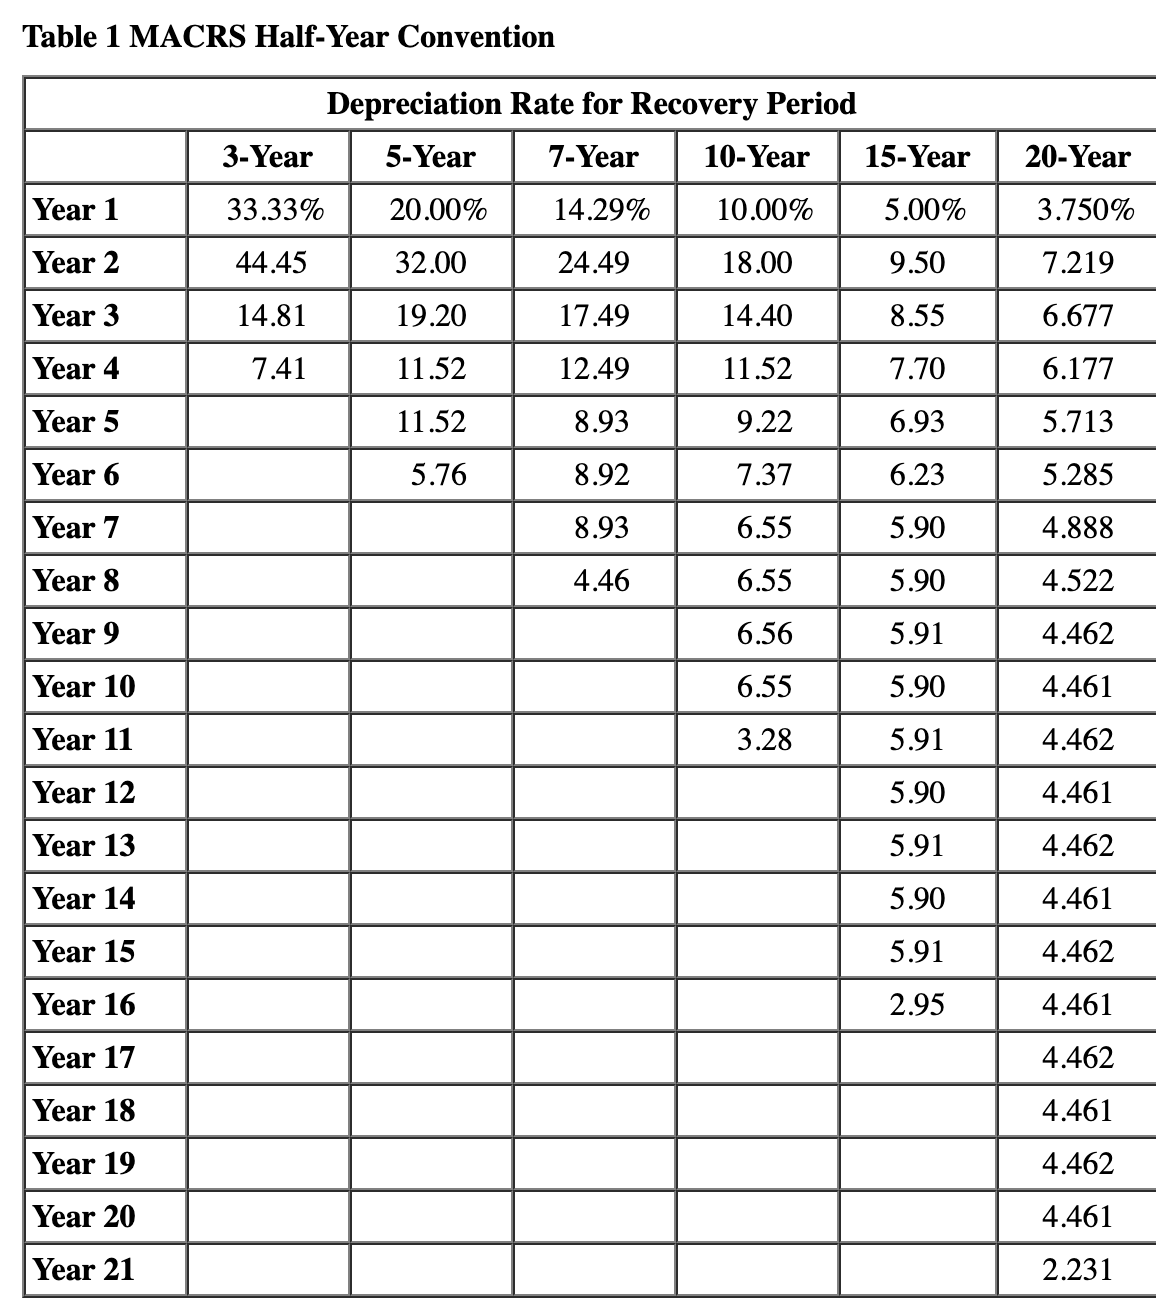 Table 1 MACRS Half-Year Convention
Depreciation Rate for Recovery Period
3-Year
5-Year
7-Year
10-Year
15-Year
20-Year
Year 1
33.33%
20.00%
14.29%
10.00%
5.00%
3.750%
Year 2
44.45
32.00
24.49
18.00
9.50
7.219
Year 3
14.81
19.20
17.49
14.40
8.55
6.677
Year 4
7.41
11.52
12.49
11.52
7.70
6.177
Year 5
11.52
8.93
9.22
6.93
5.713
Year 6
5.76
8.92
7.37
6.23
5.285
Year 7
8.93
6.55
5.90
4.888
Year 8
4.46
6.55
5.90
4.522
Year 9
6.56
5.91
4.462
Year 10
6.55
5.90
4.461
Year 11
3.28
5.91
4.462
Year 12
5.90
4.461
Year 13
5.91
4.462
Year 14
5.90
4.461
Year 15
5.91
4.462
Year 16
2.95
4.461
Year 17
4.462
Year 18
4.461
Year 19
4.462
Year 20
4.461
Year 21
2.231
